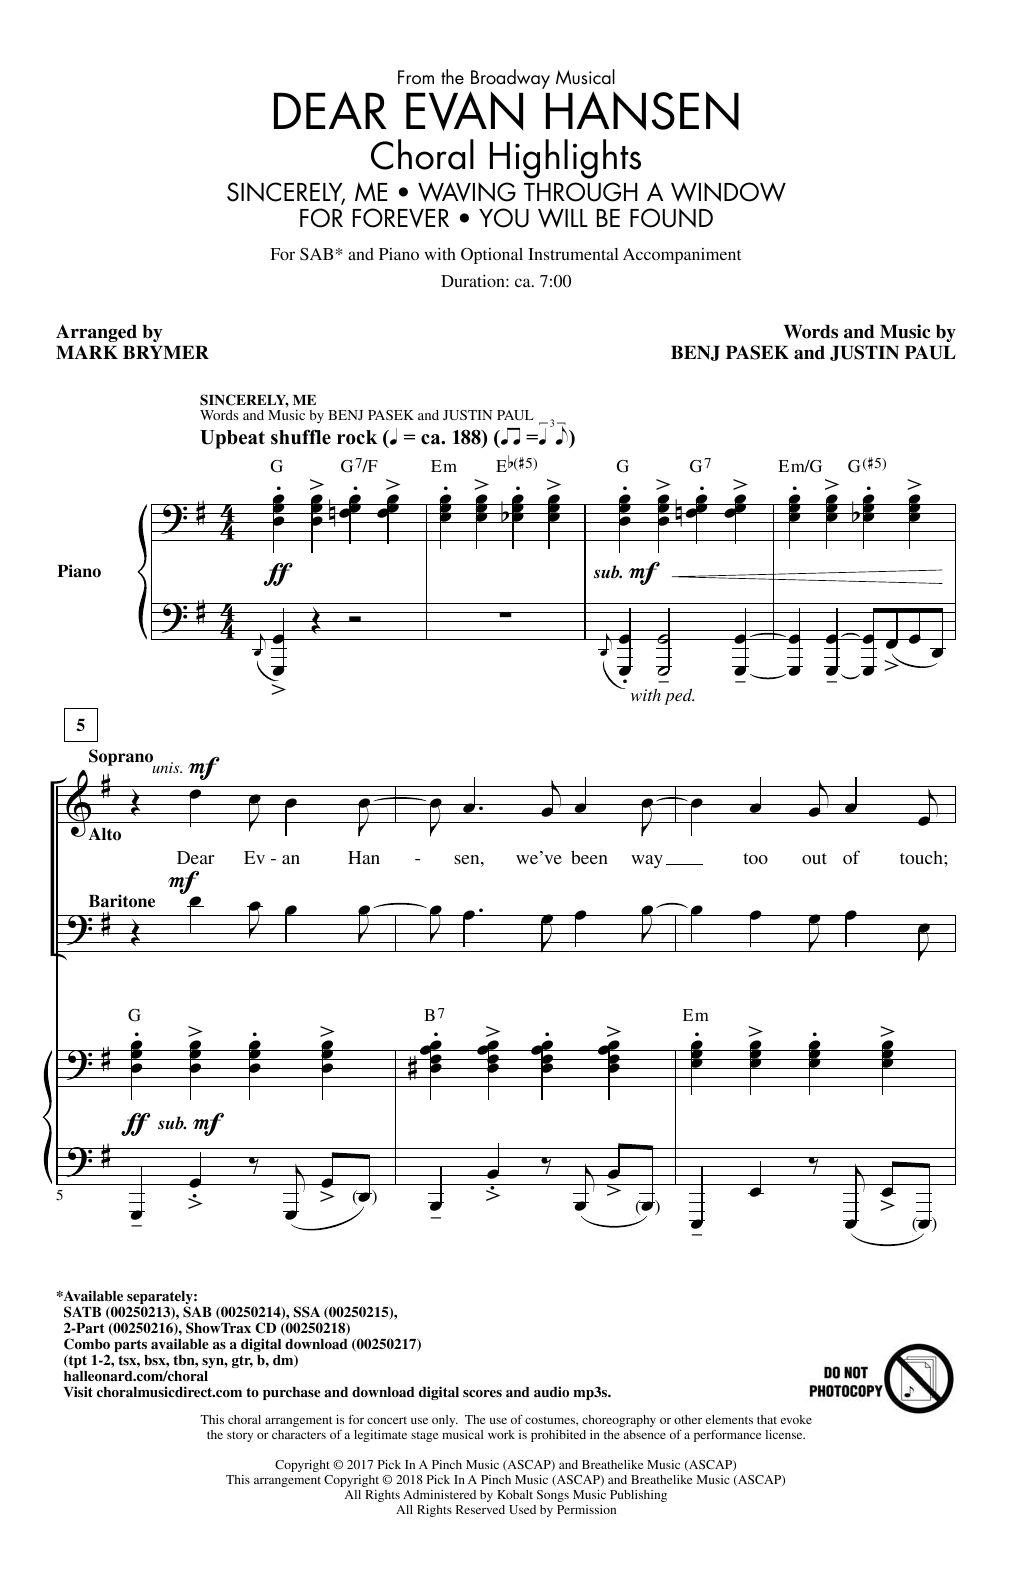 Mark Brymer Dear Evan Hansen (Choral Highlights) Sheet Music Notes & Chords for SSA - Download or Print PDF